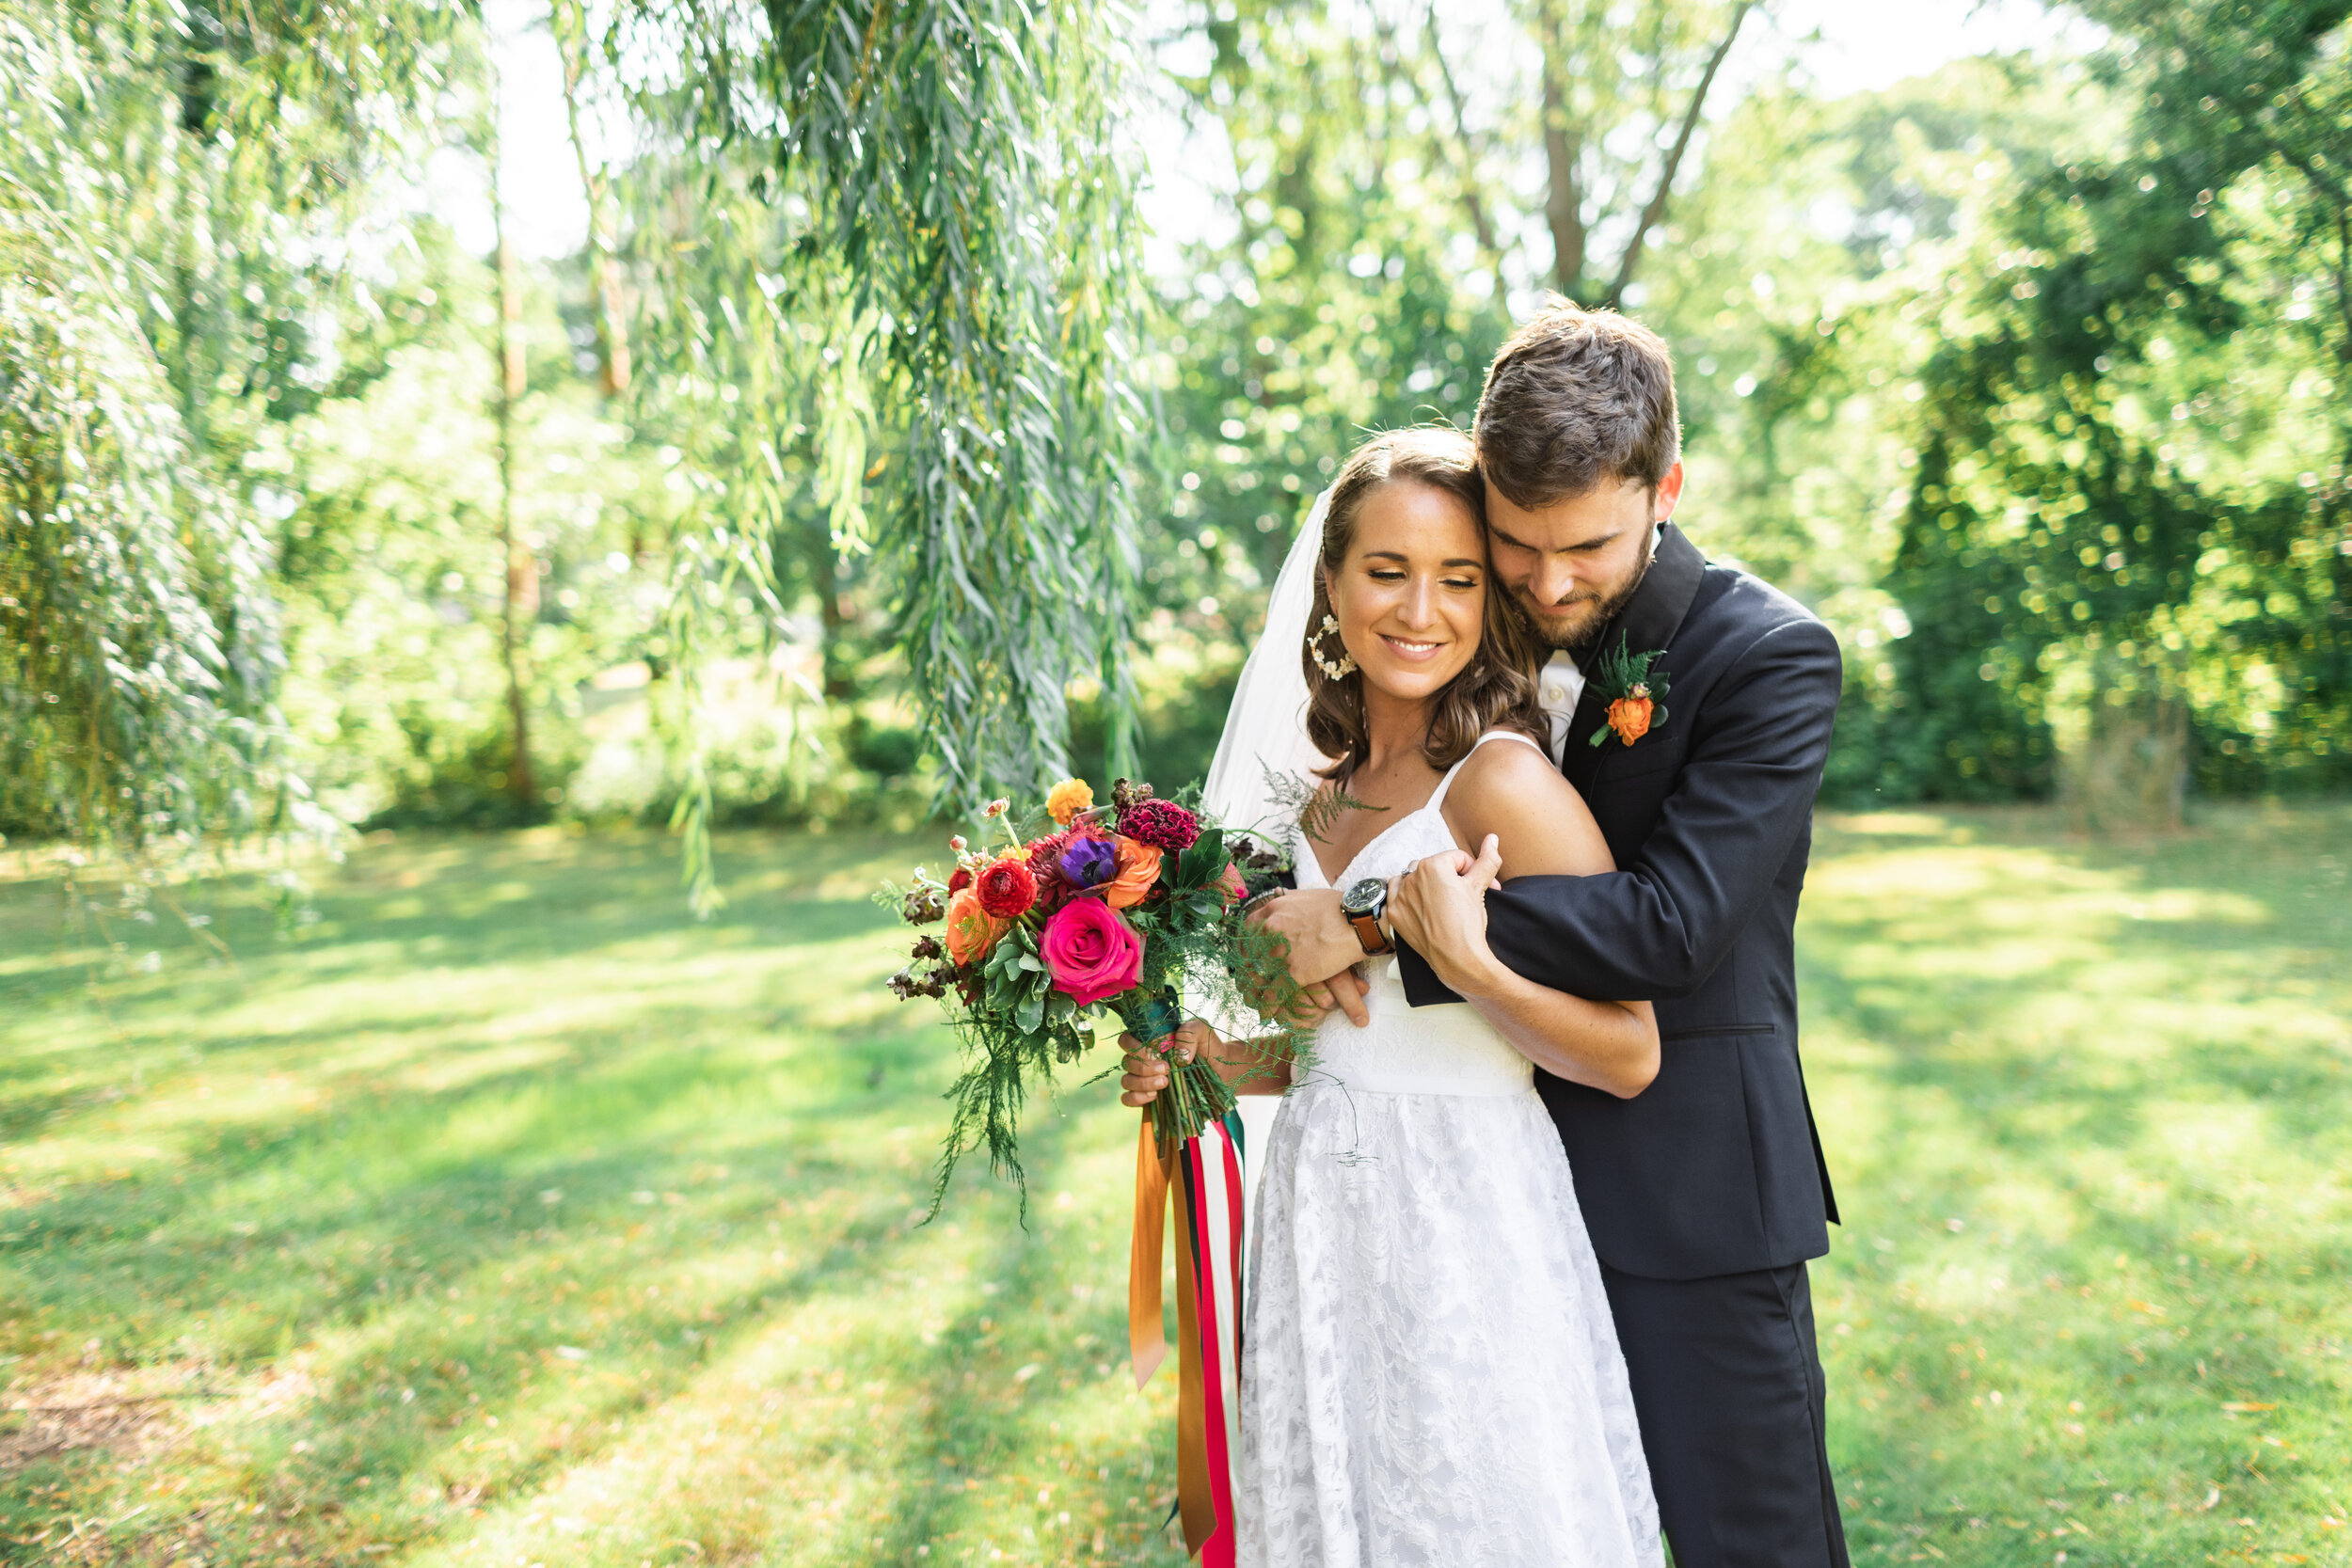 Intimate Backyard Wedding in Cleveland Ohio by Cleveland Wedding Photographer Lindsey Ramdin